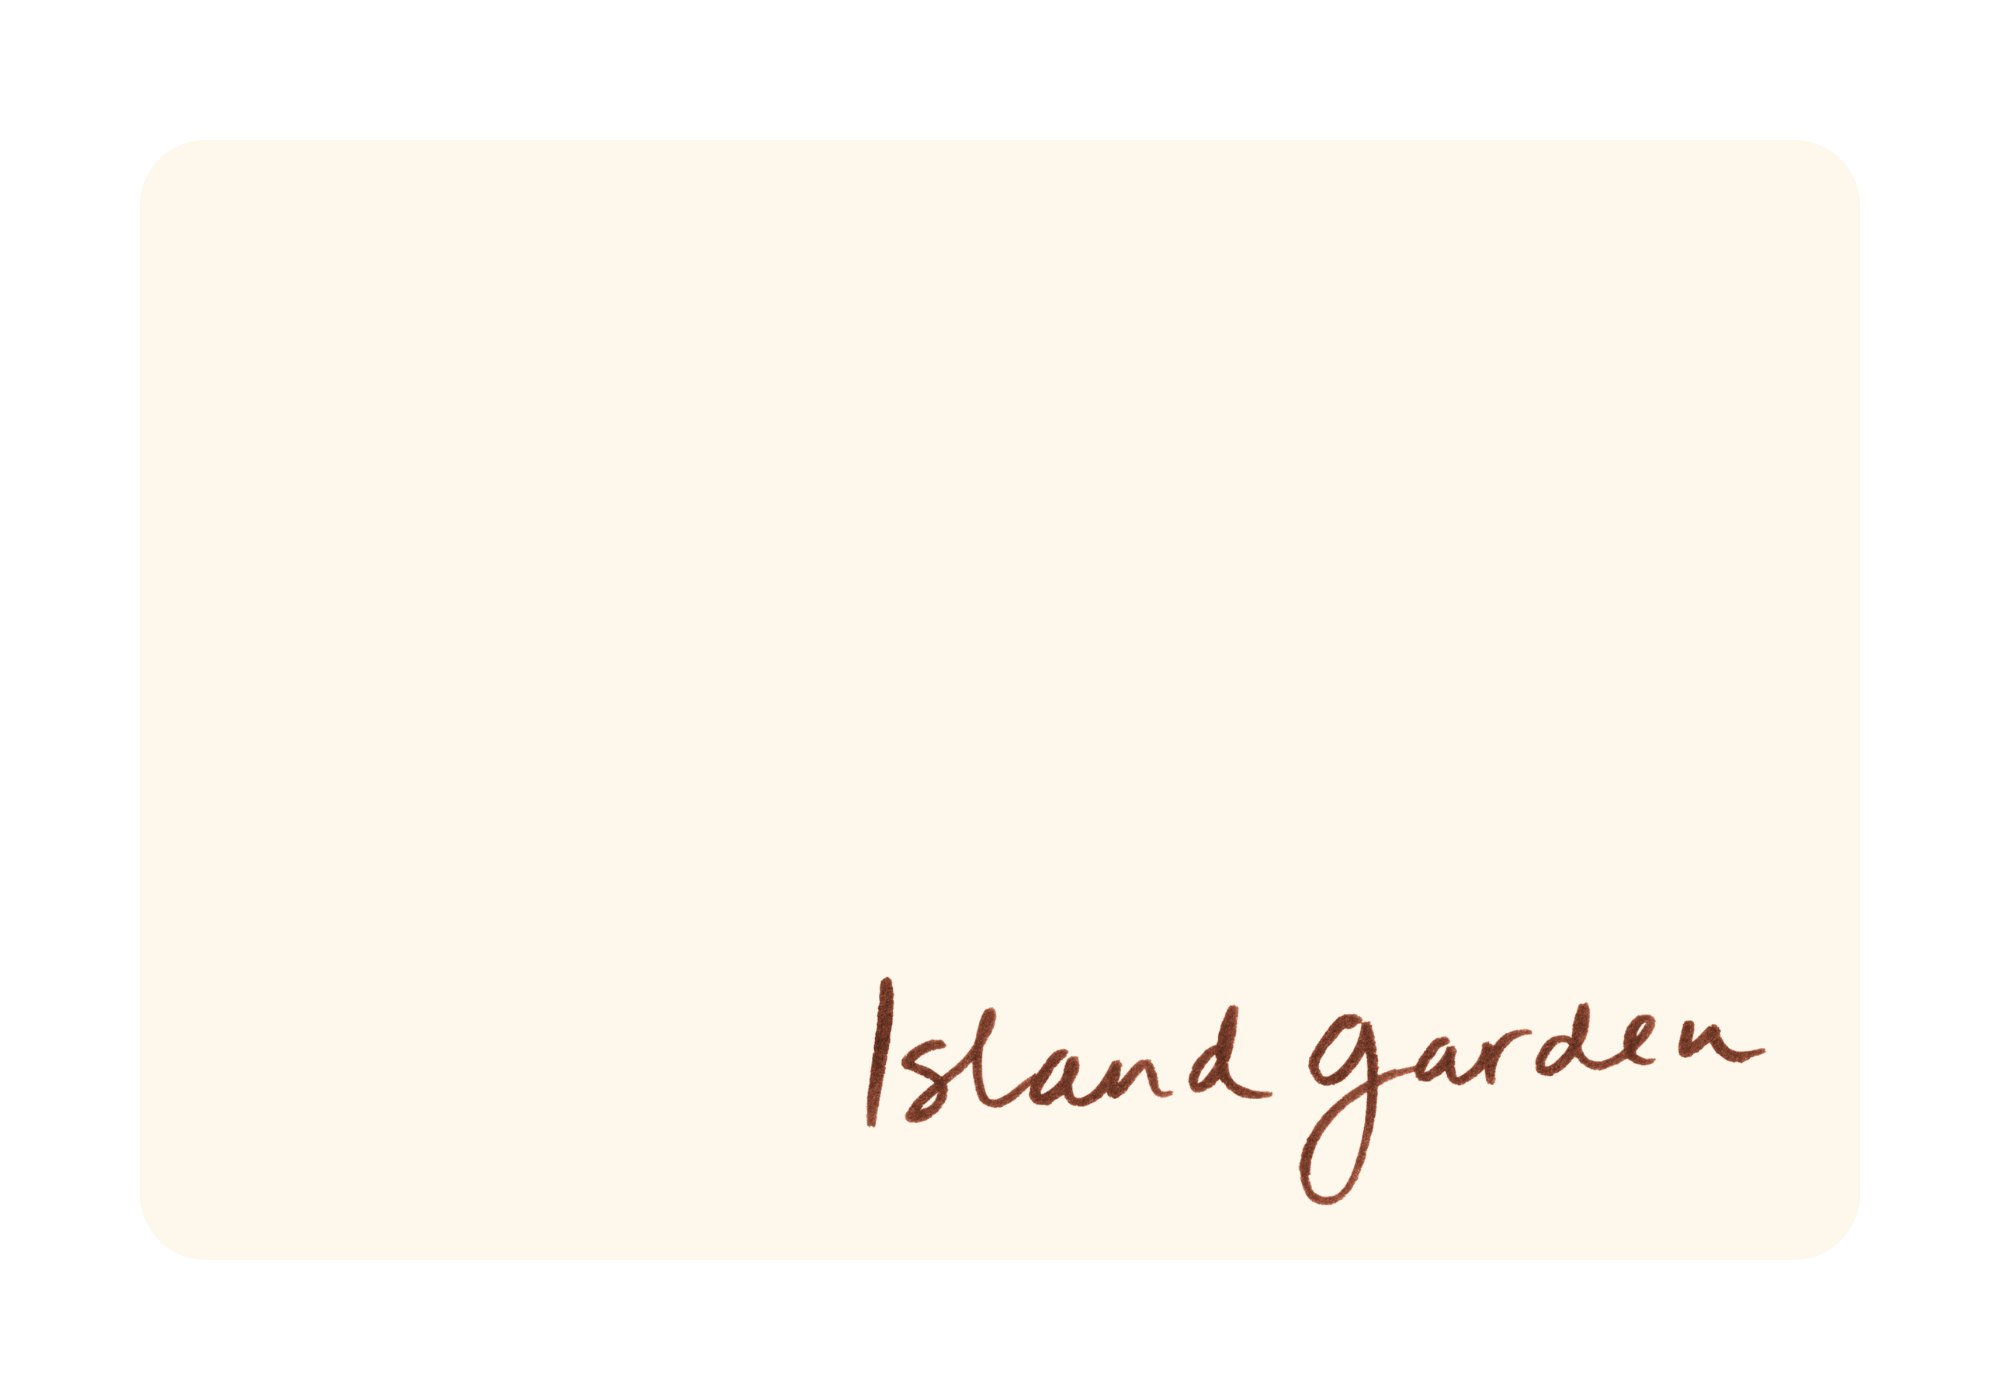 Island Garden Gift Card